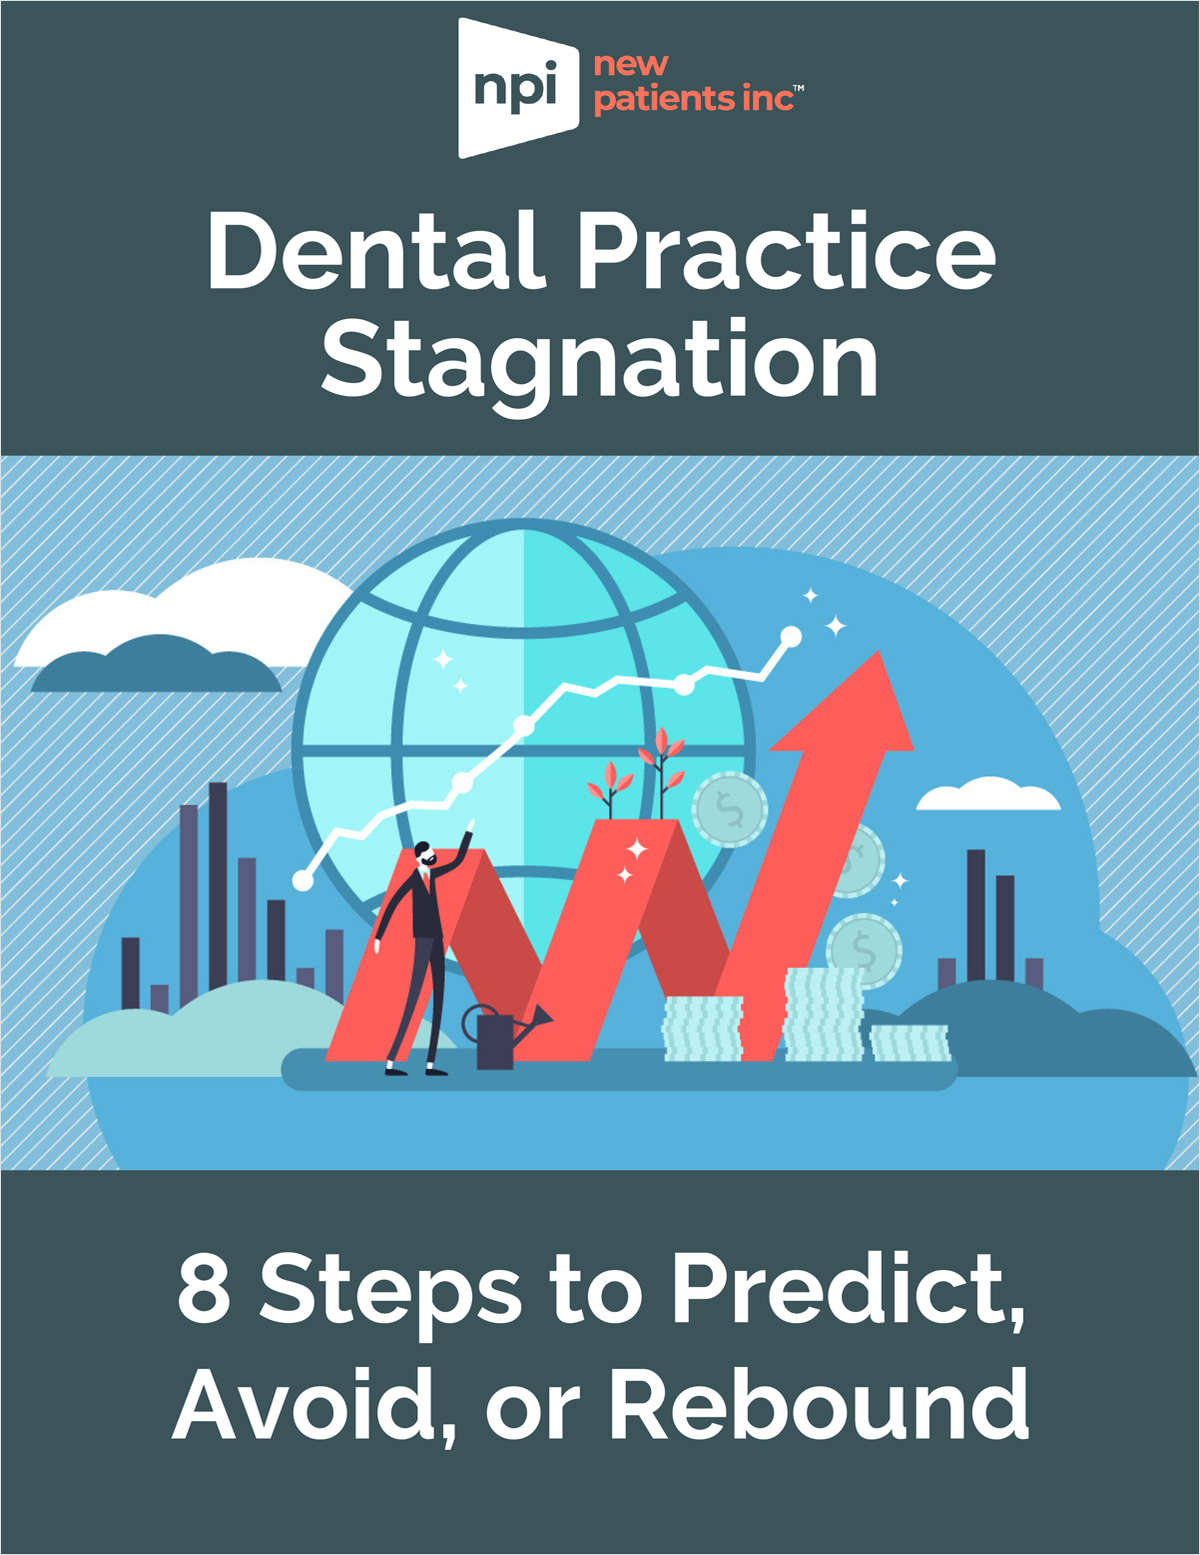 Dental Practice Stagnation: 8 Steps to Predict, Avoid, or Rebound